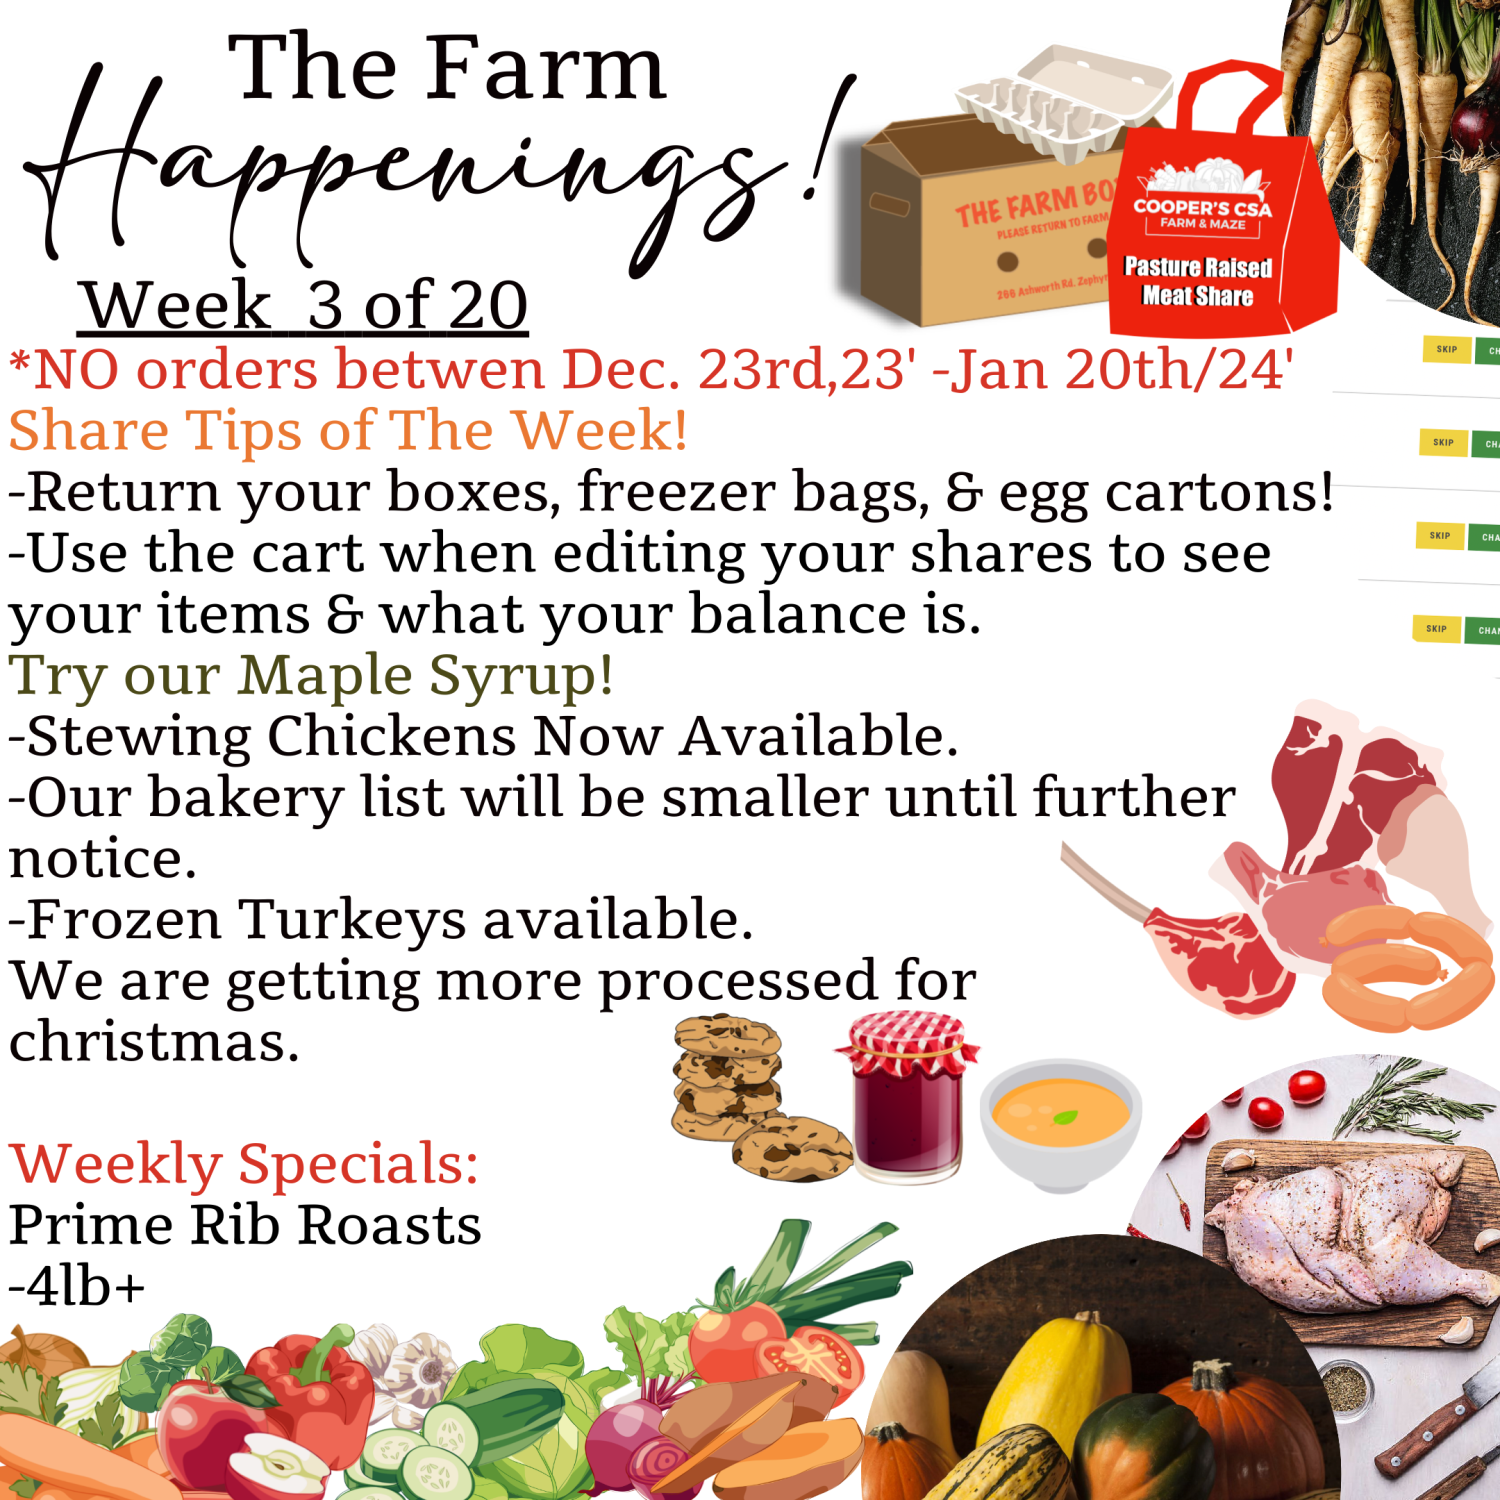 Next Happening: "The Farm Box"-Coopers CSA Farm Farm Happenings November 28th-Dec.2nd